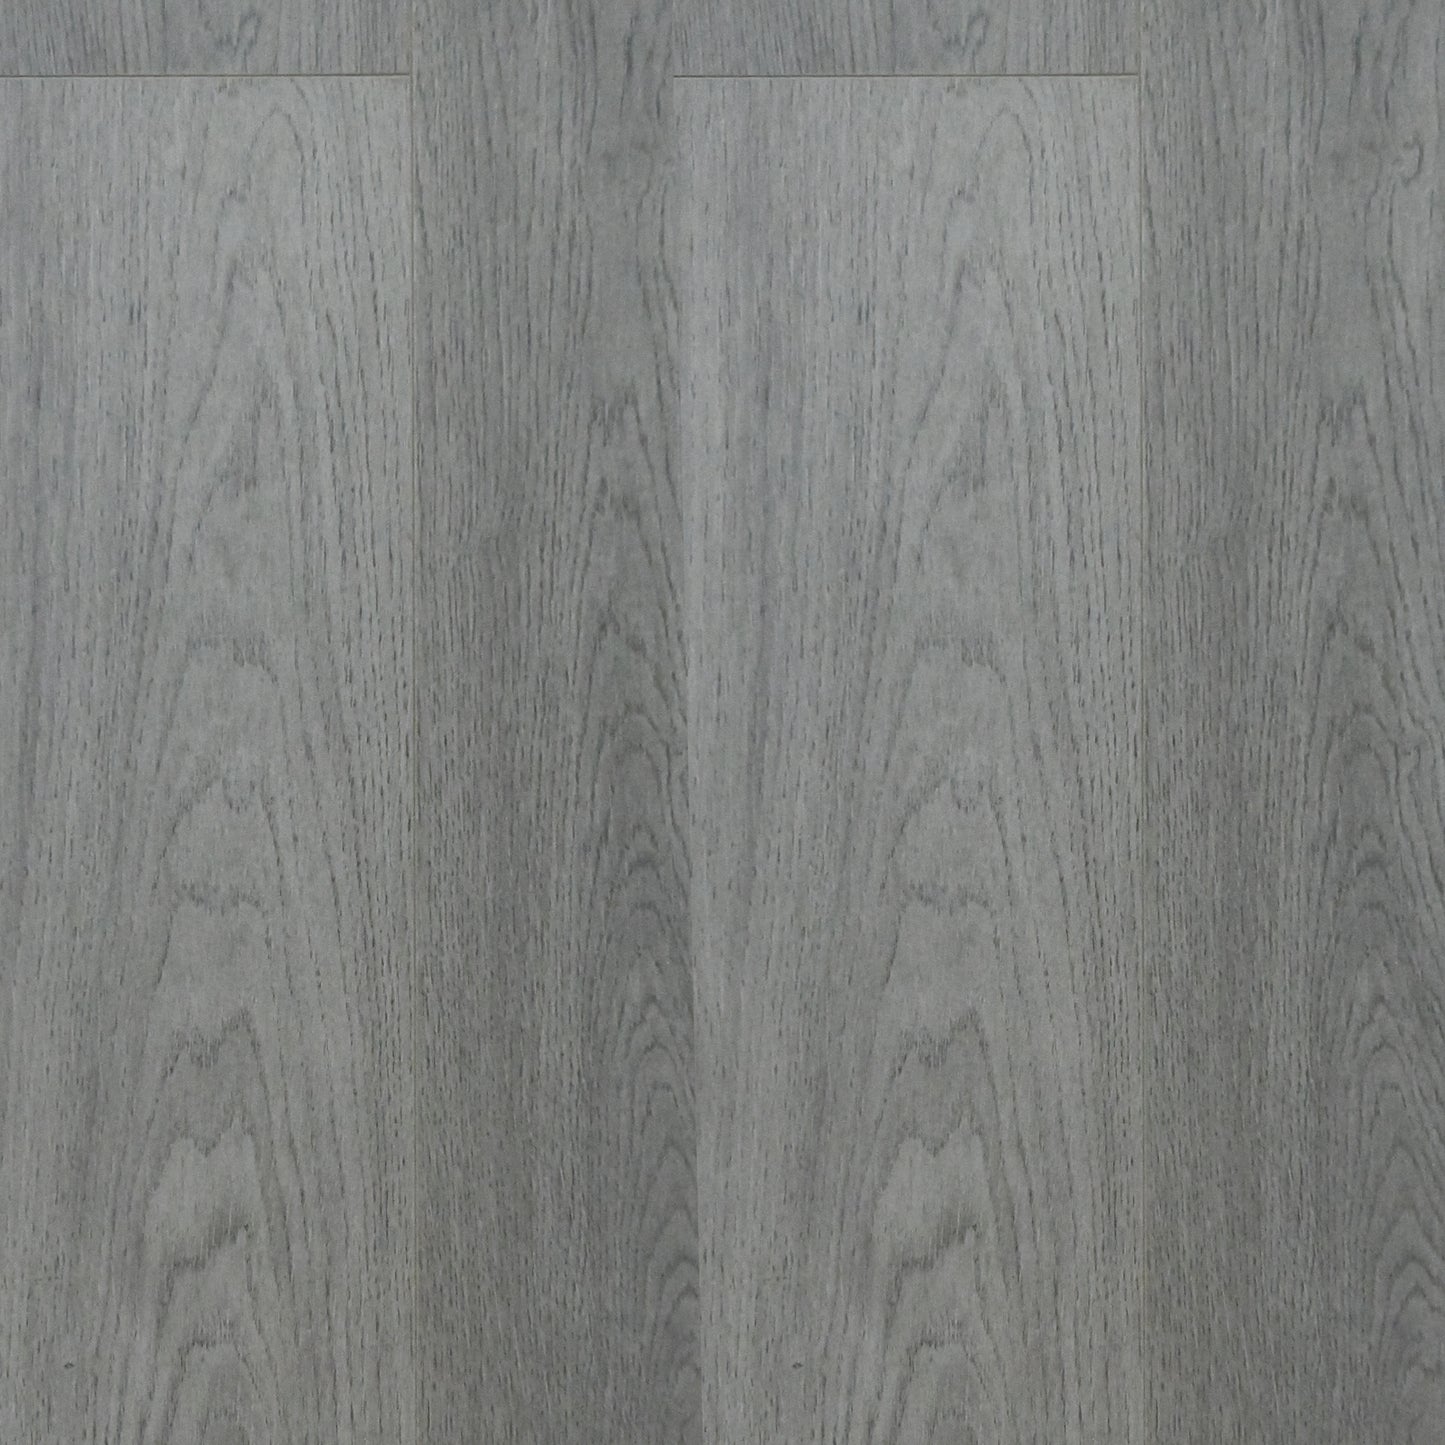 Gum Grey Laminate Flooring by KLD Home